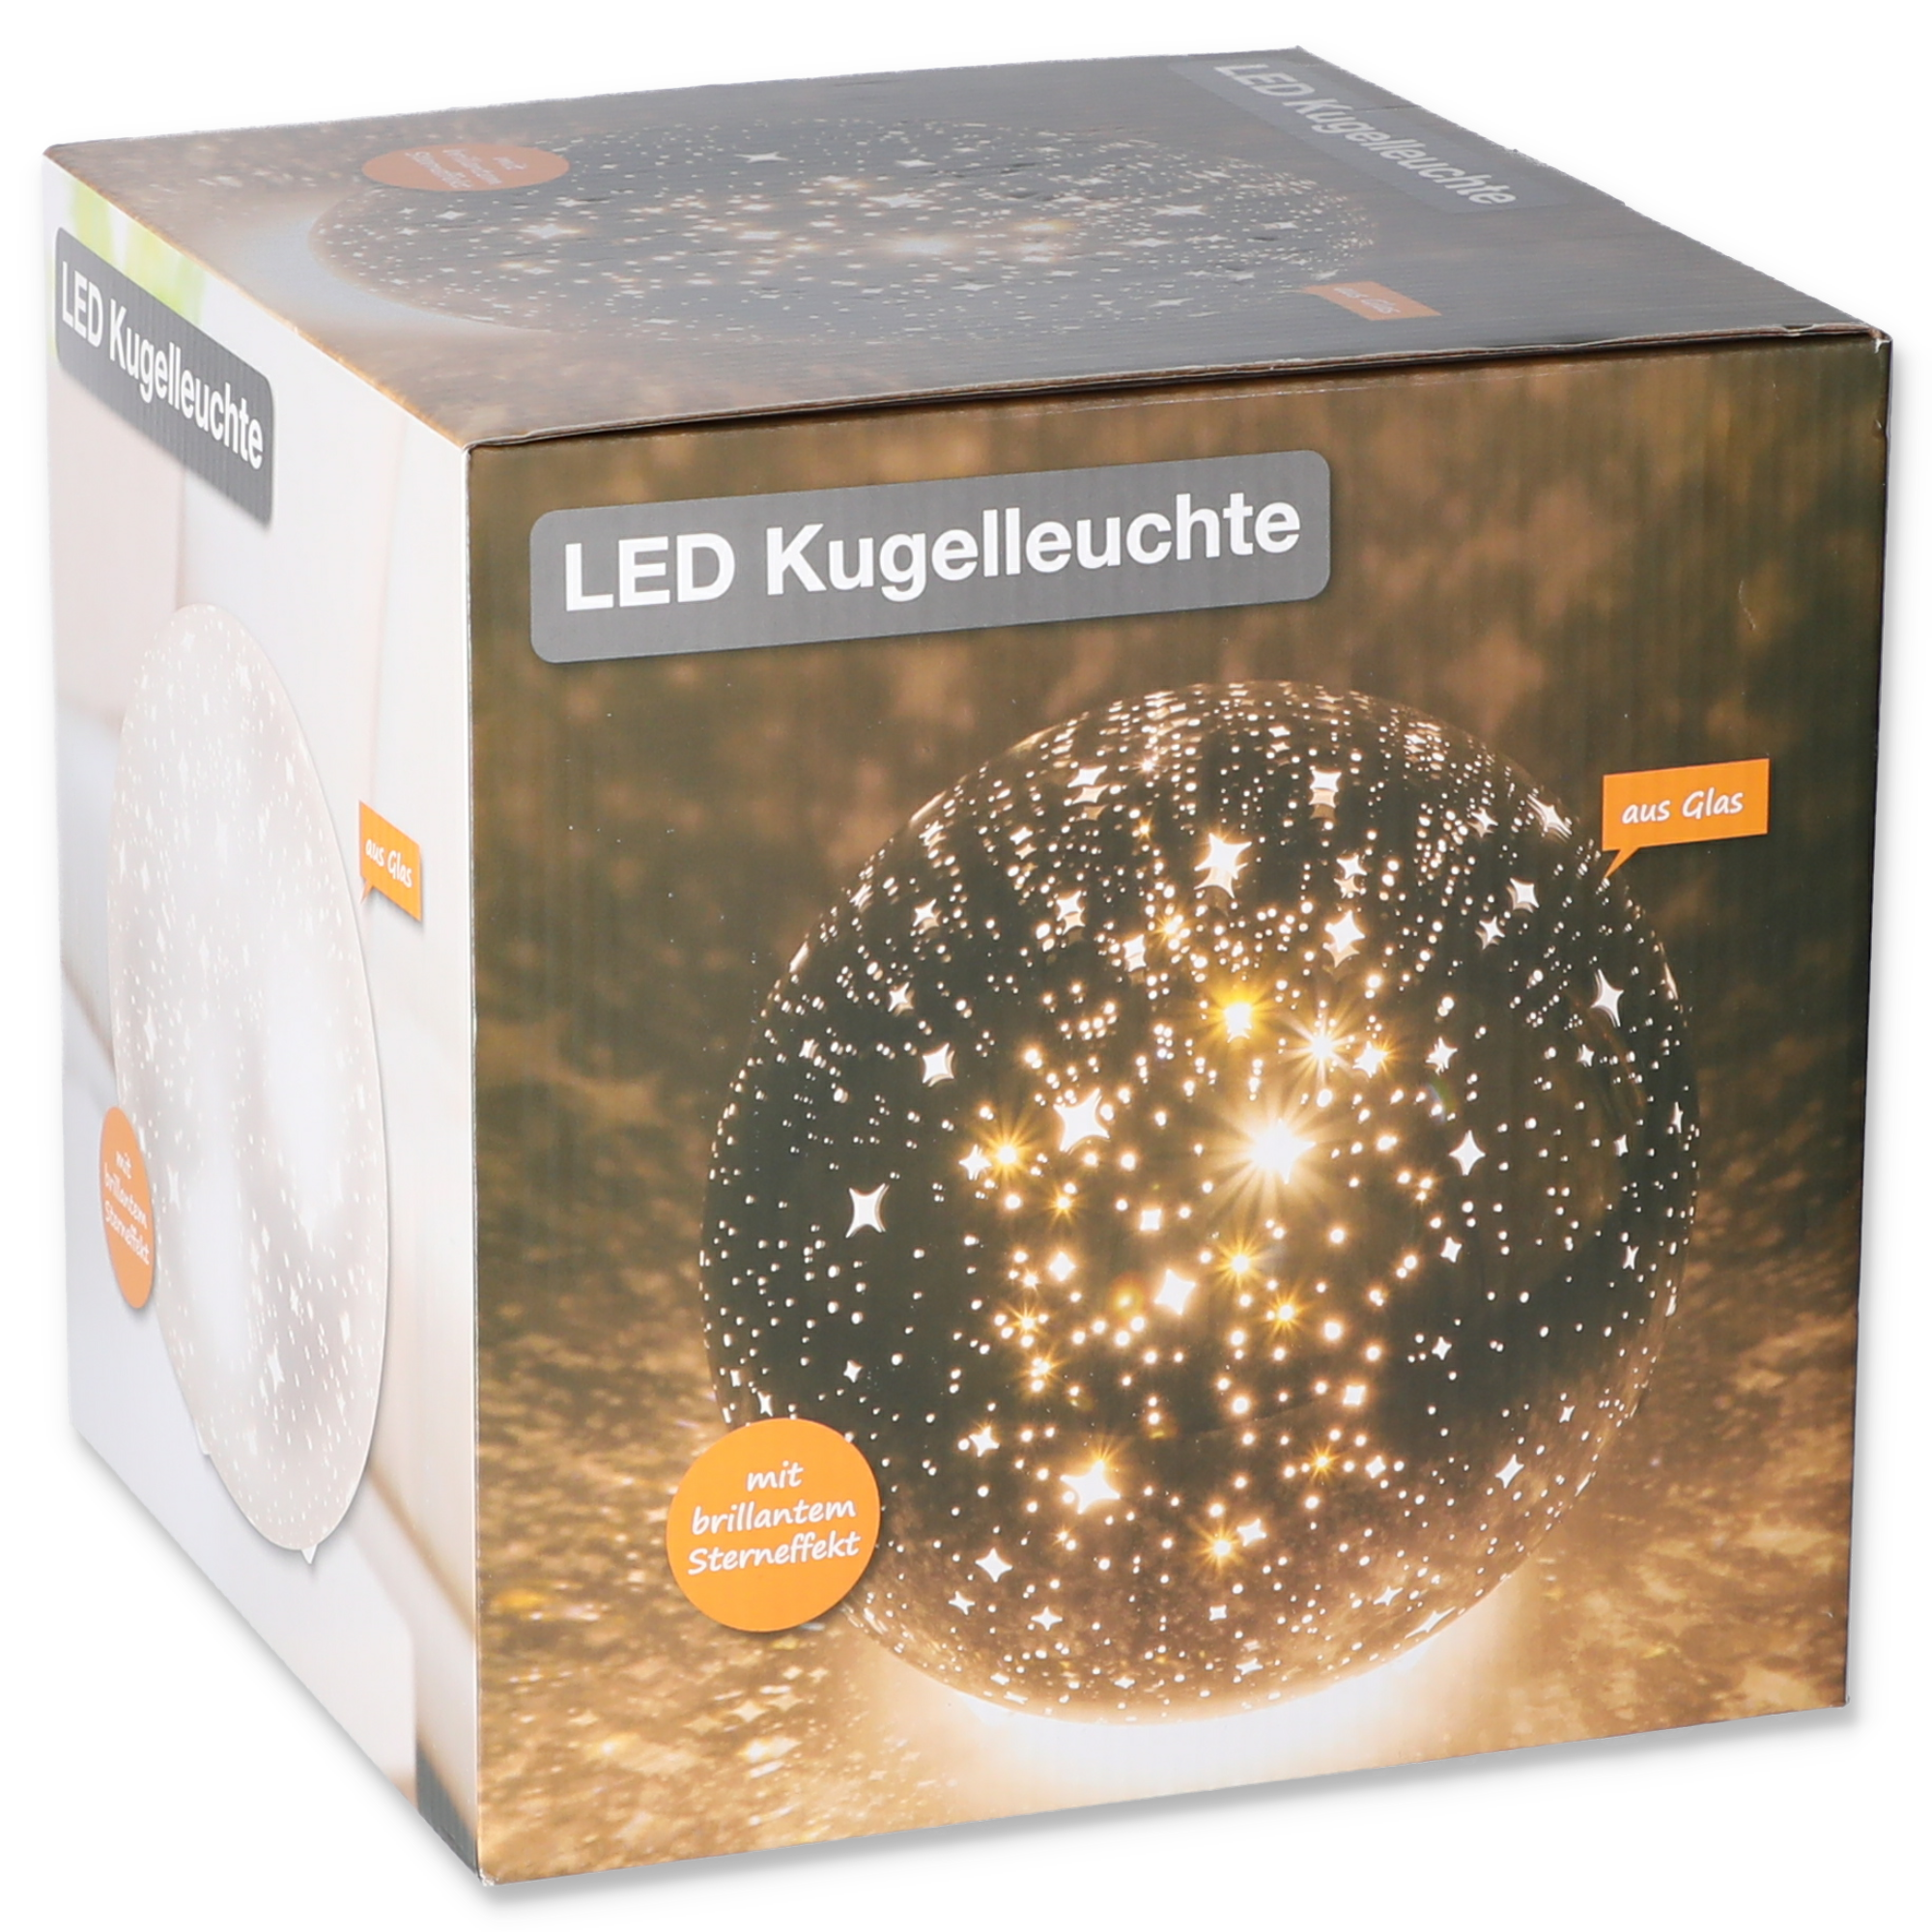 LED-Kugelleuchte mit Sterneneffekt Ø 20 cm silbern + product picture